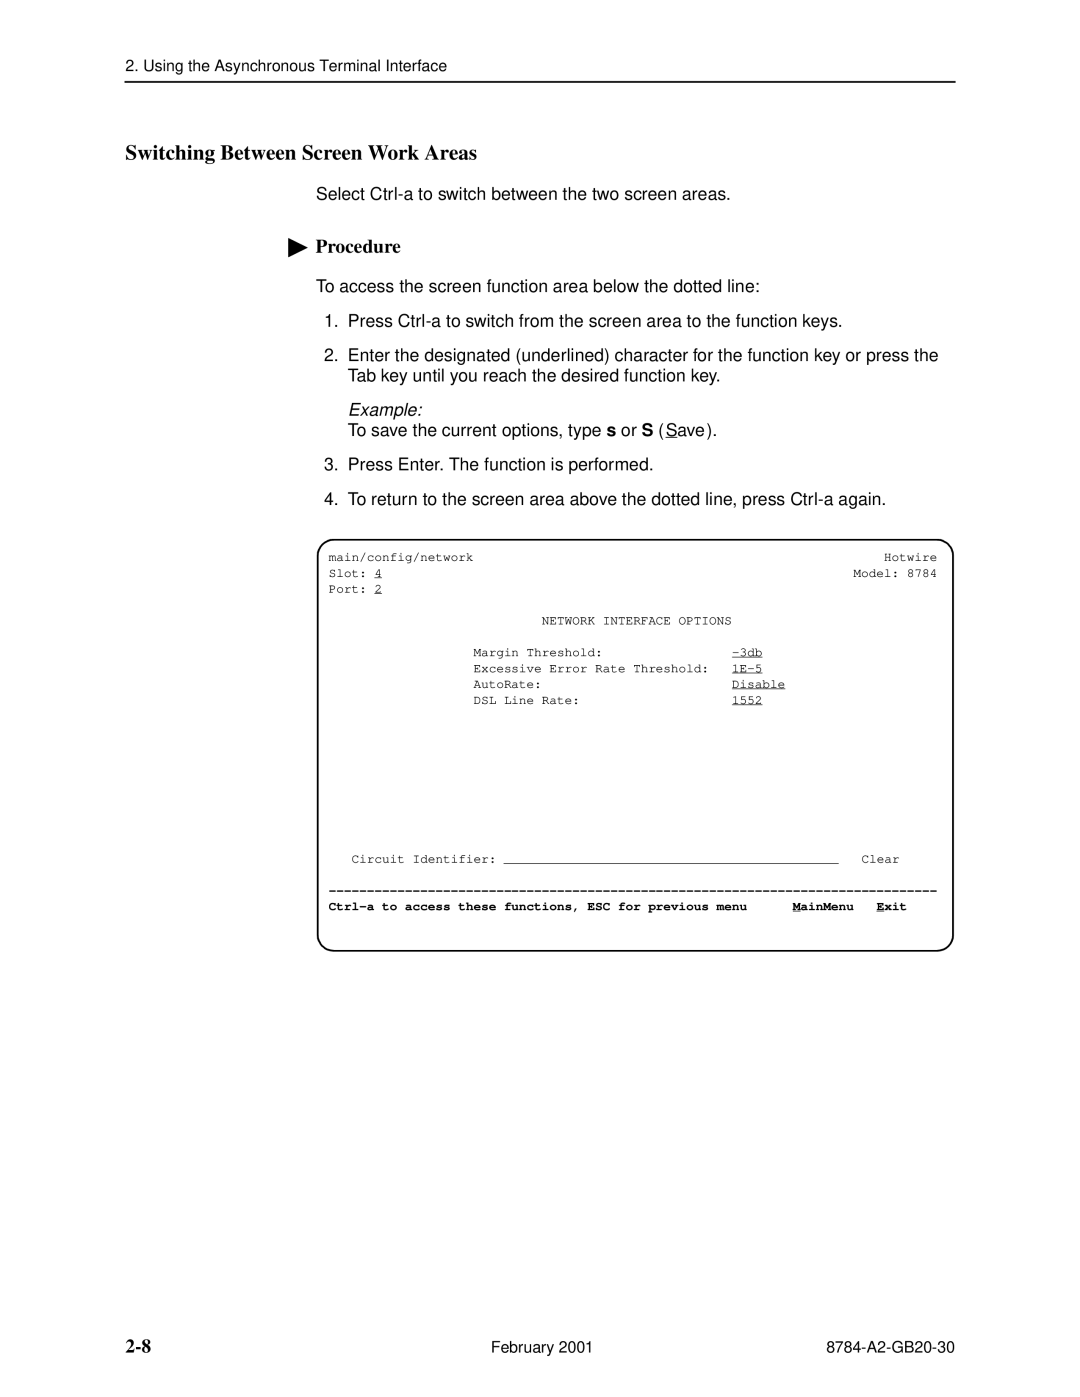 Paradyne 8784 manual Switching Between Screen Work Areas, Example, Procedure 